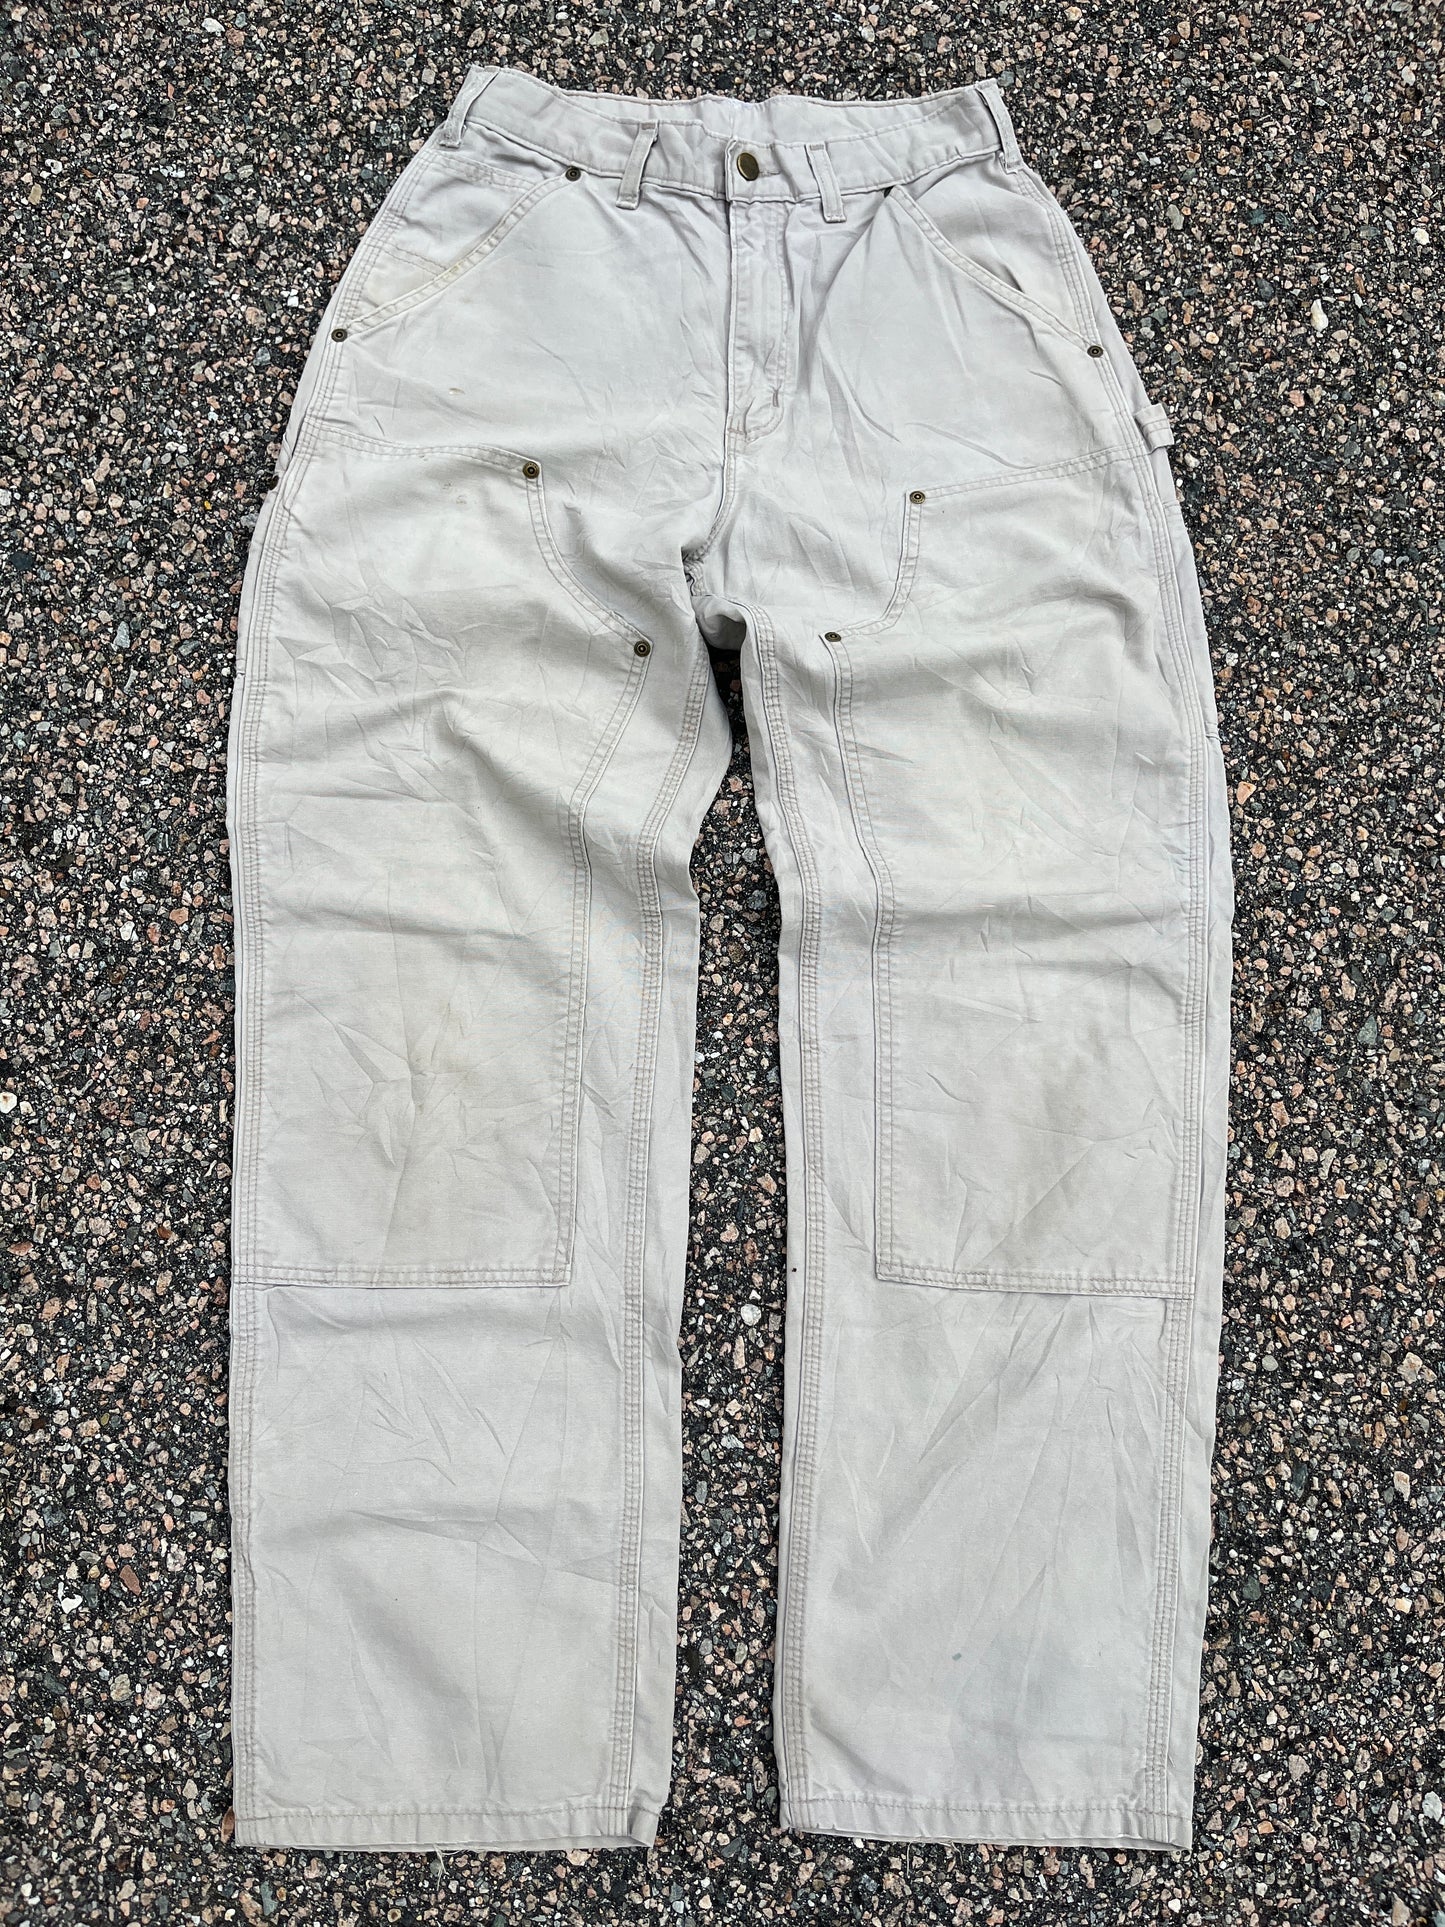 Faded Beige Carhartt Double Knee Pants - 28 x 31.5